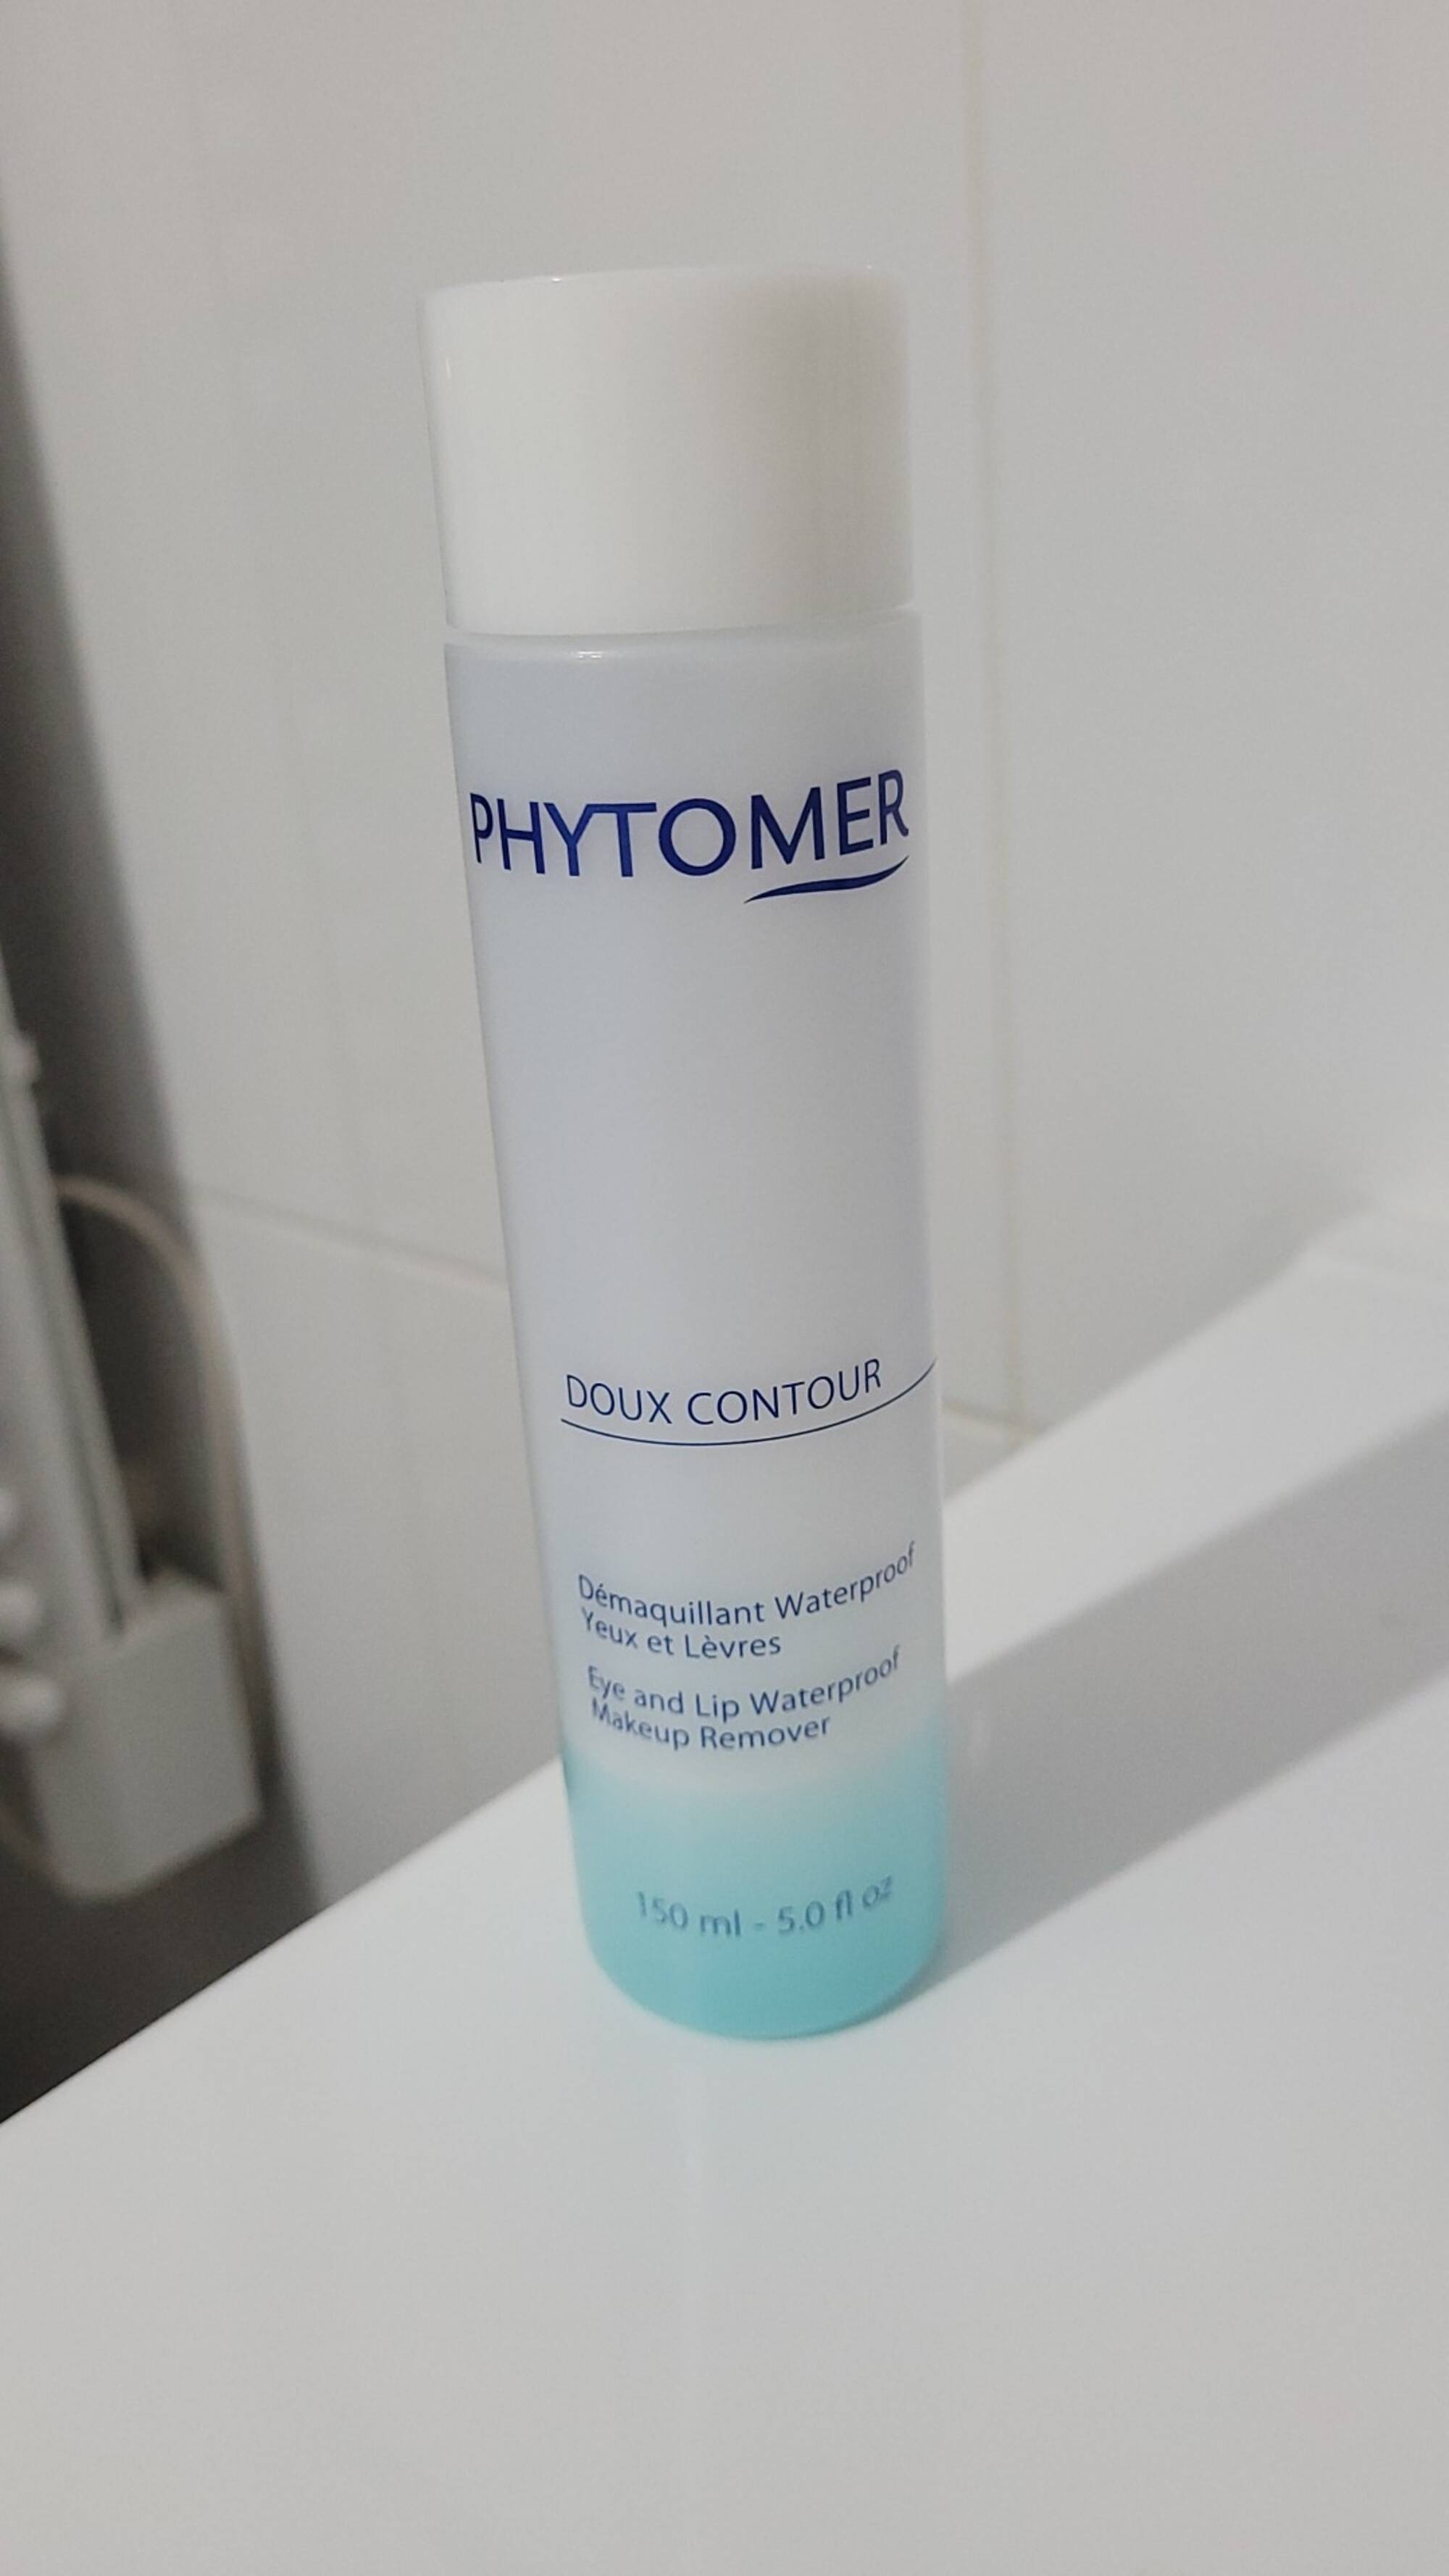 PHYTOMER - Doux contour - Démaquillant waterproof